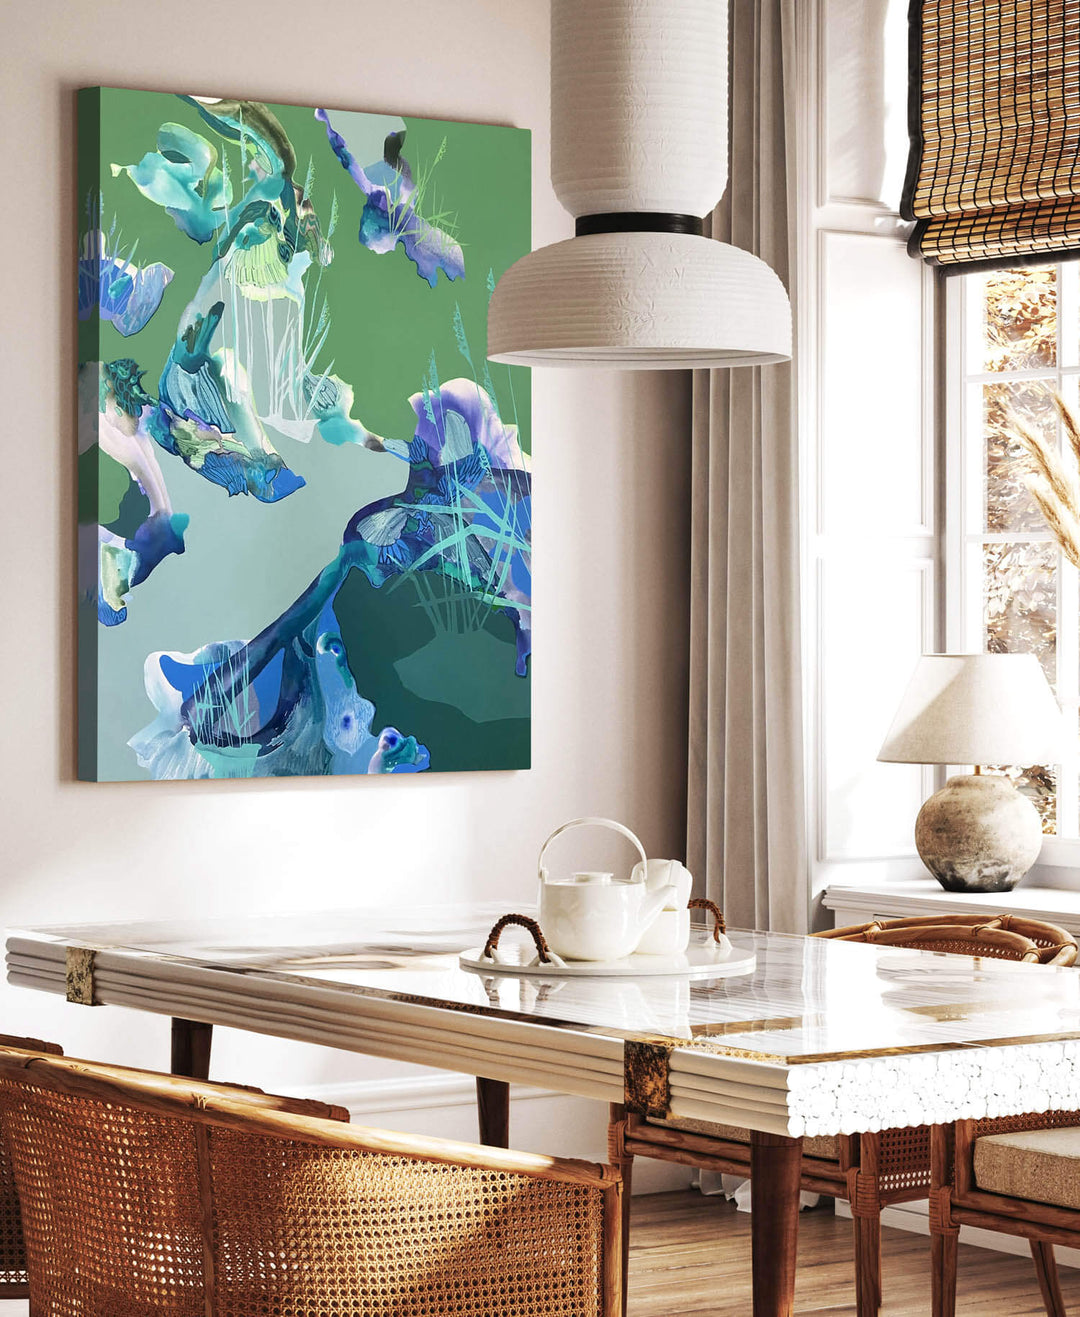 abstract coastal art in dining room scene